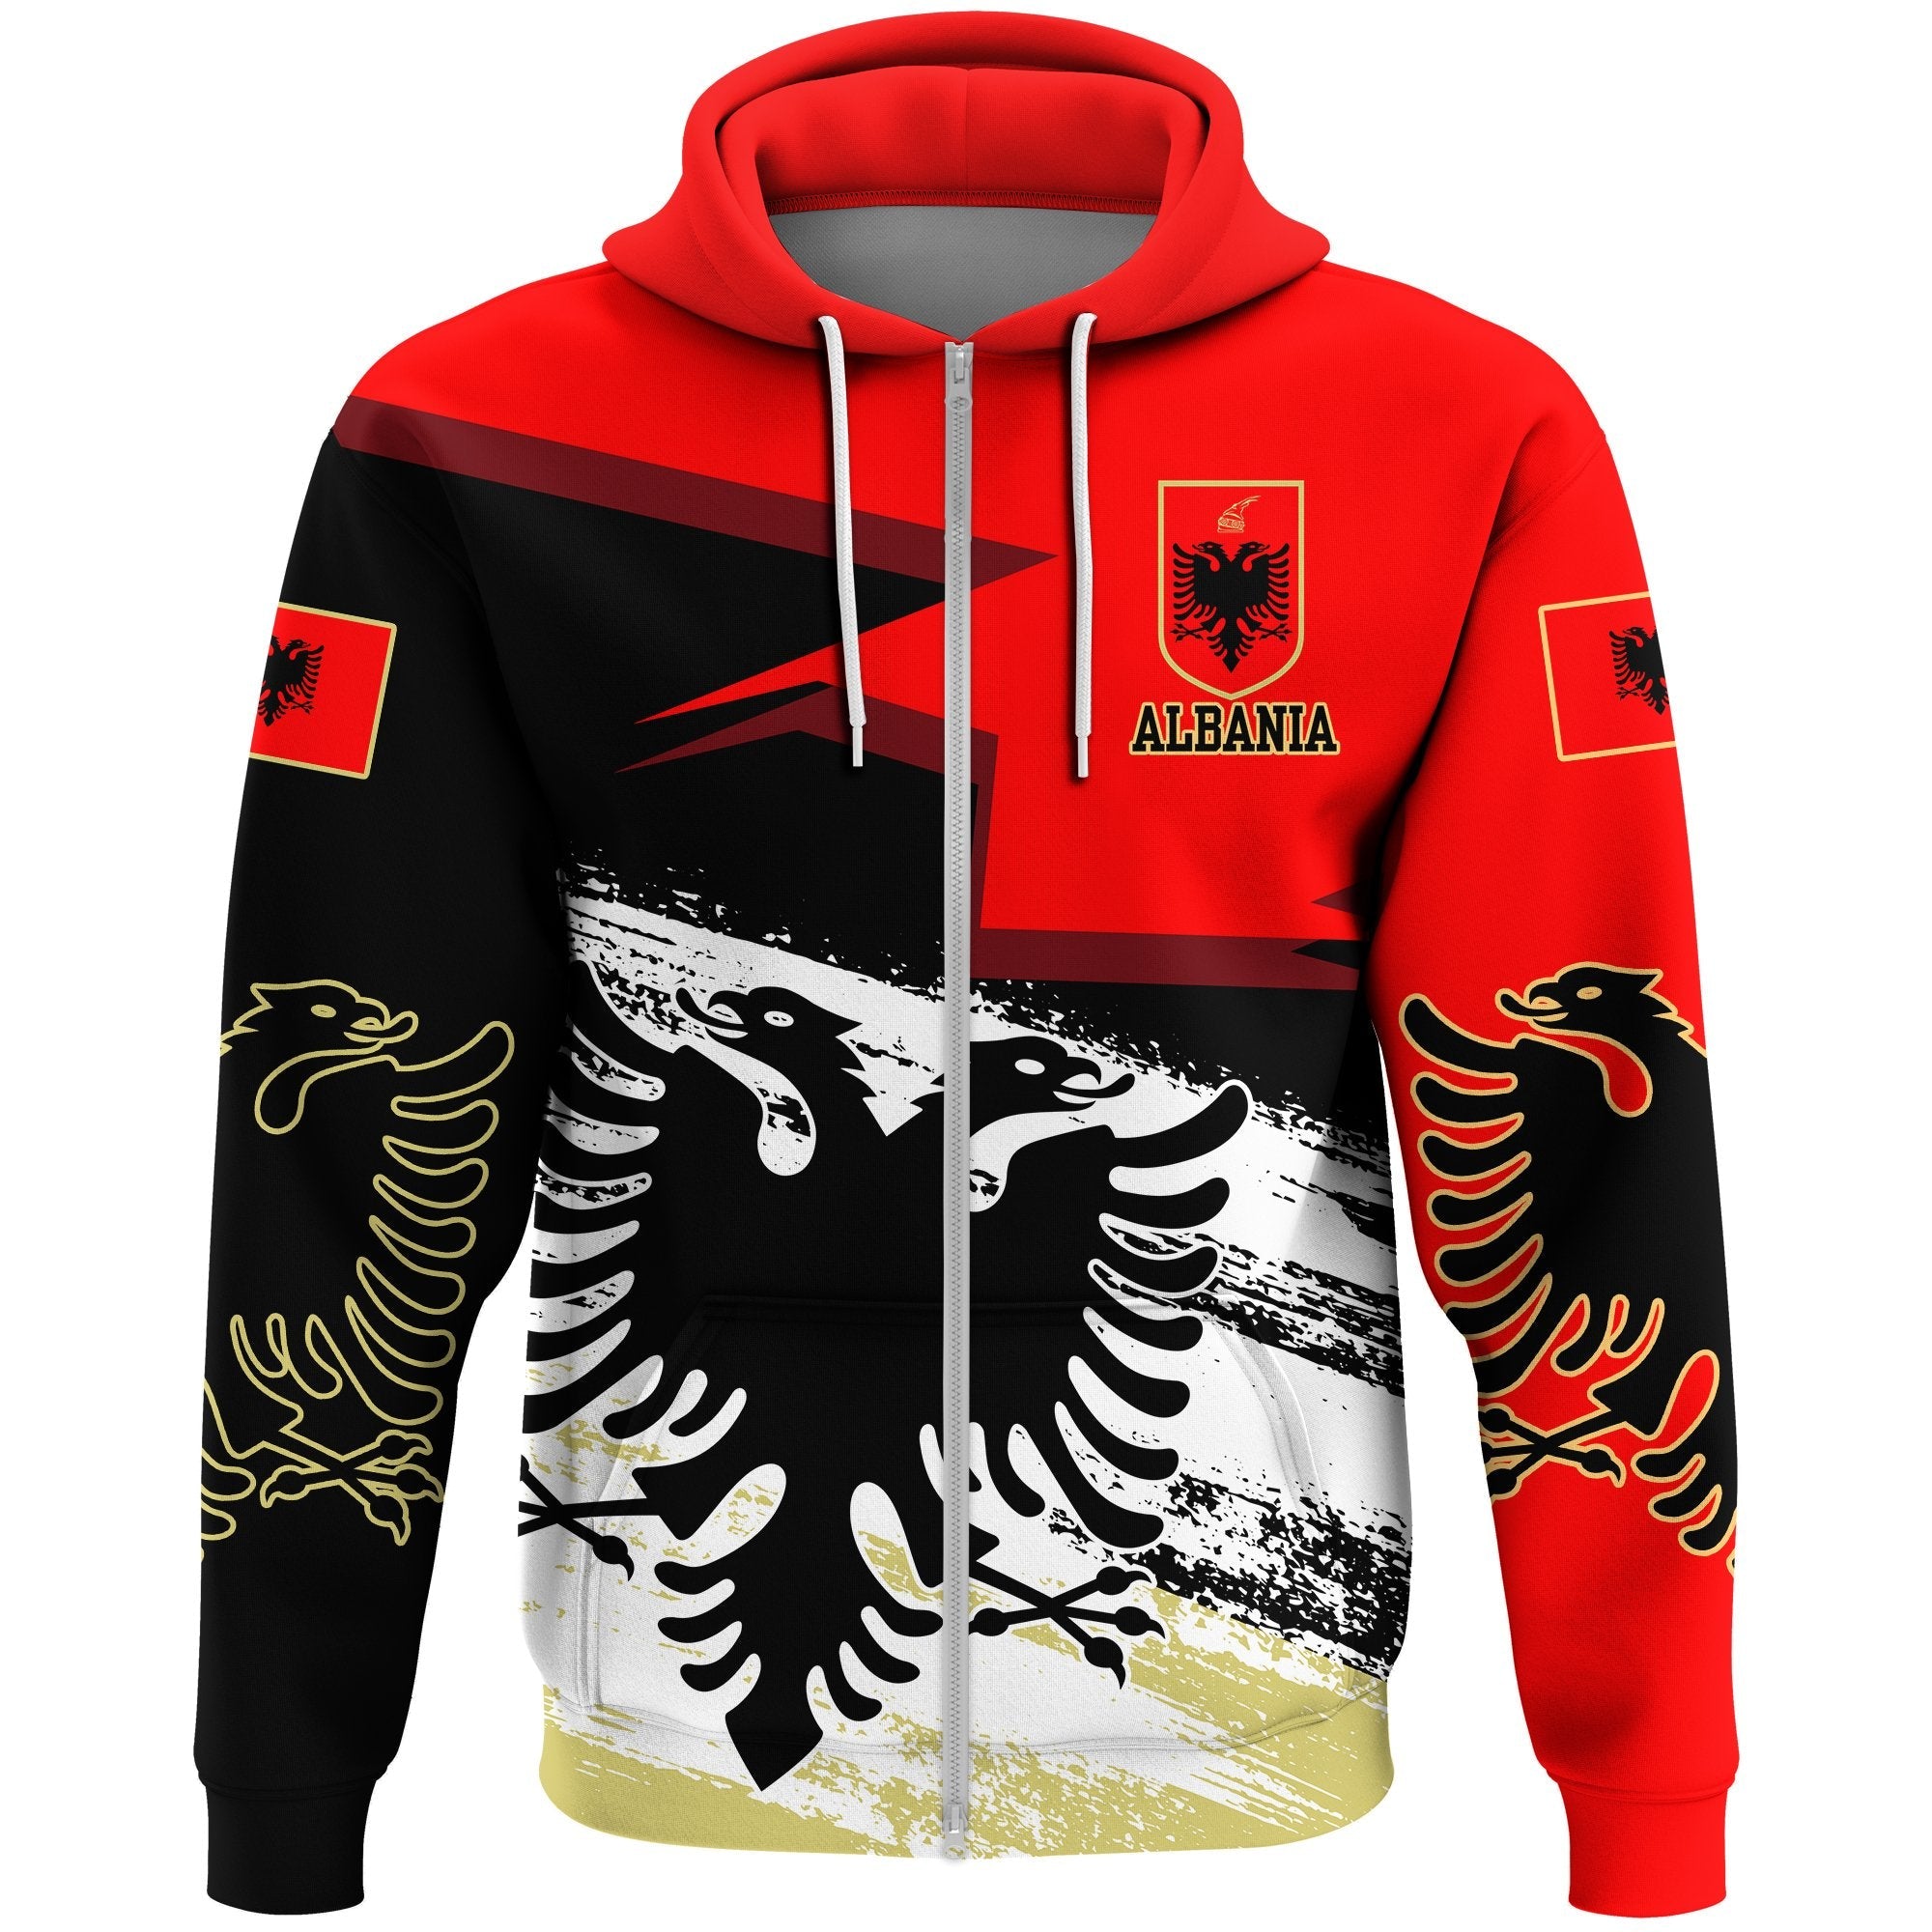 albania-zip-hoodie-albania-black-double-headed-eagle-flag-new-collection